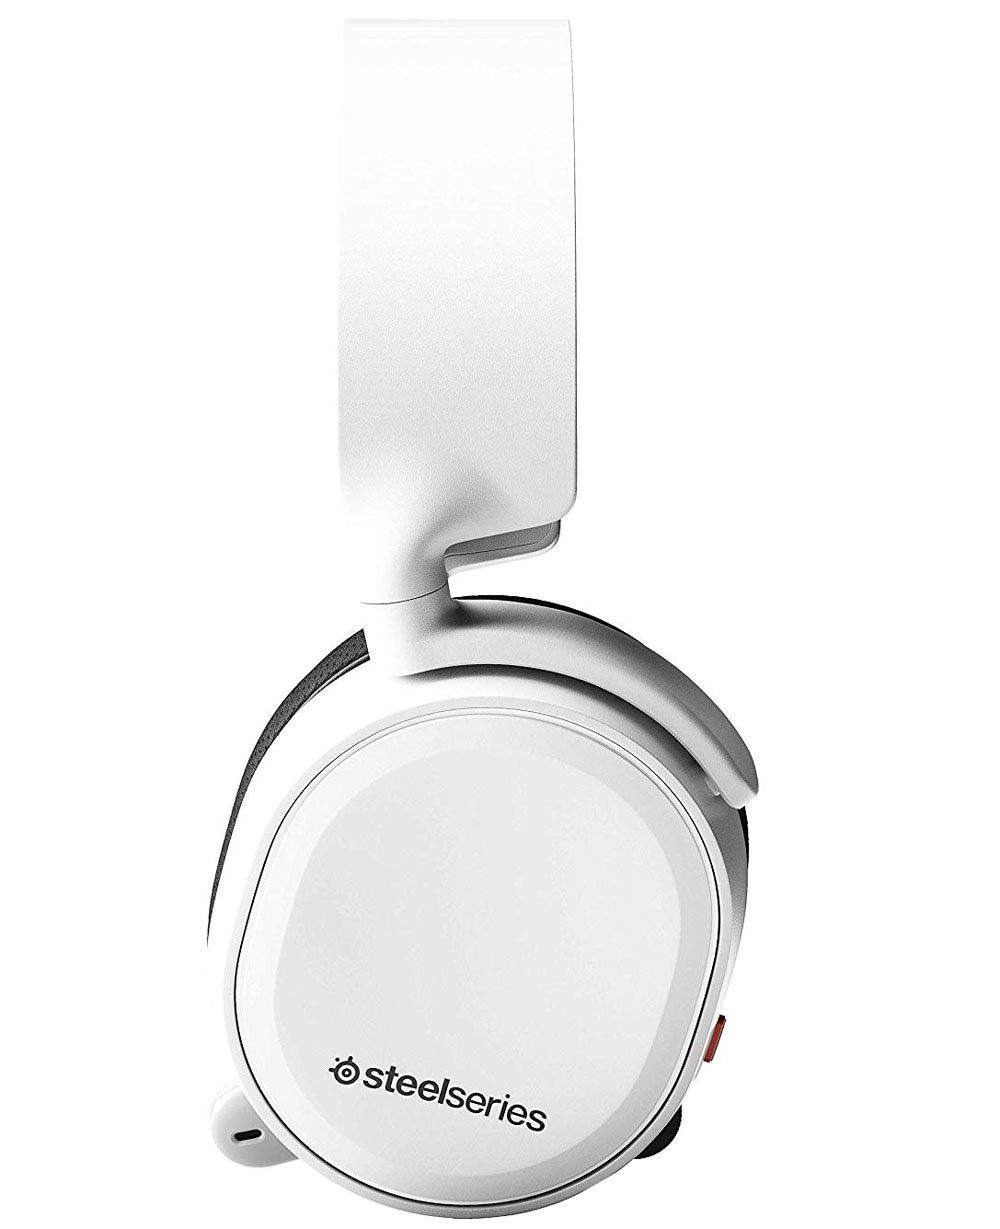 Steelseries ARCTIS 3 2019 Edition Headset - White